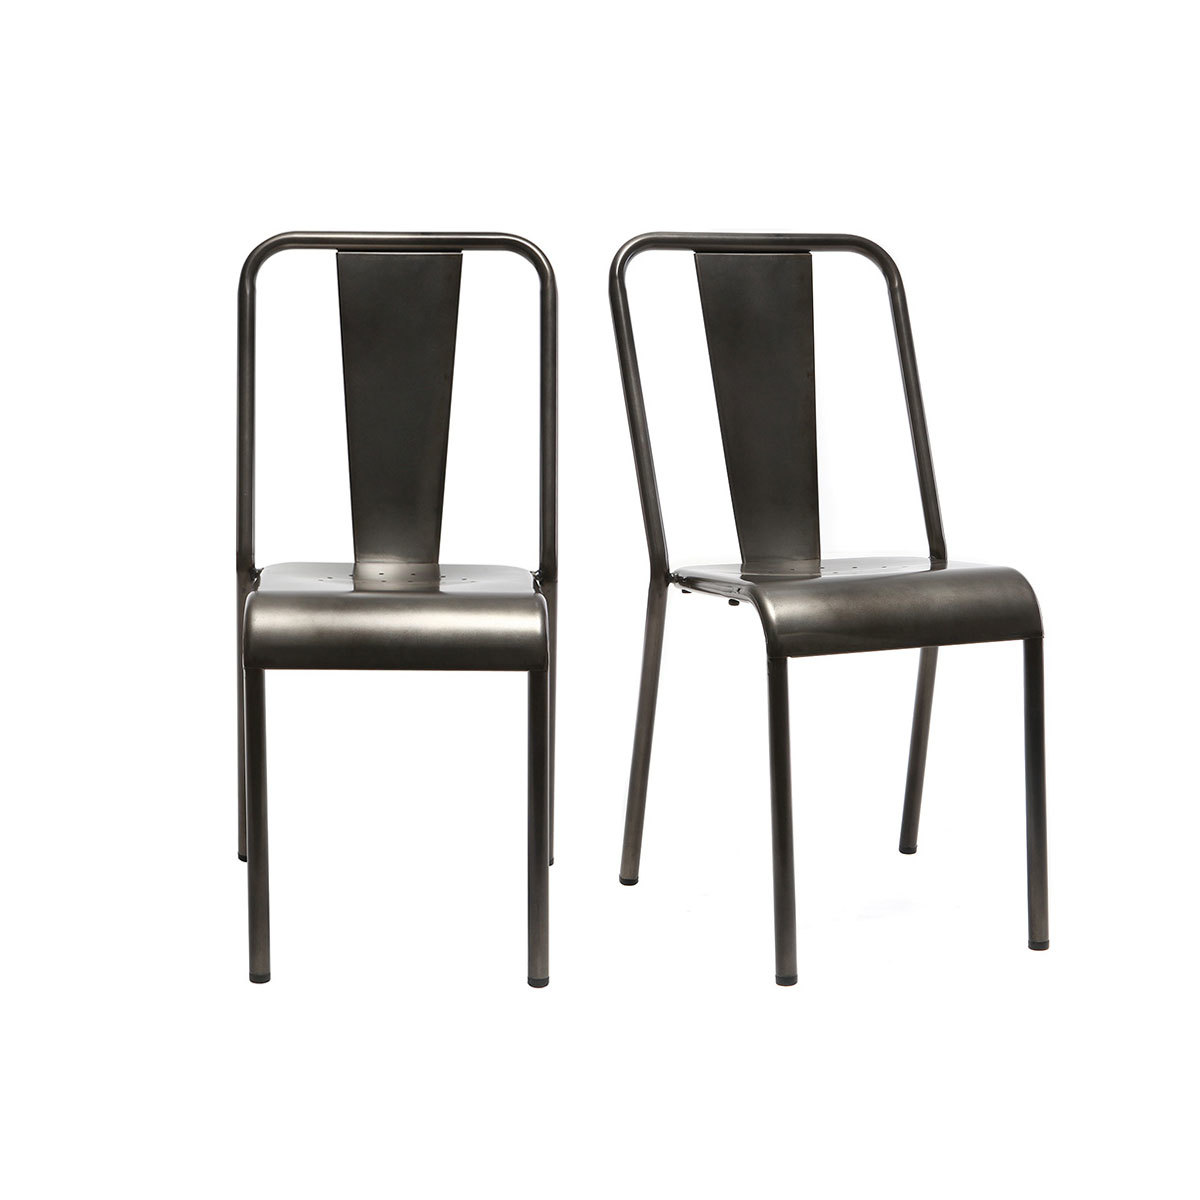 Chaises design métal inox (lot de 2) EVAN vue1